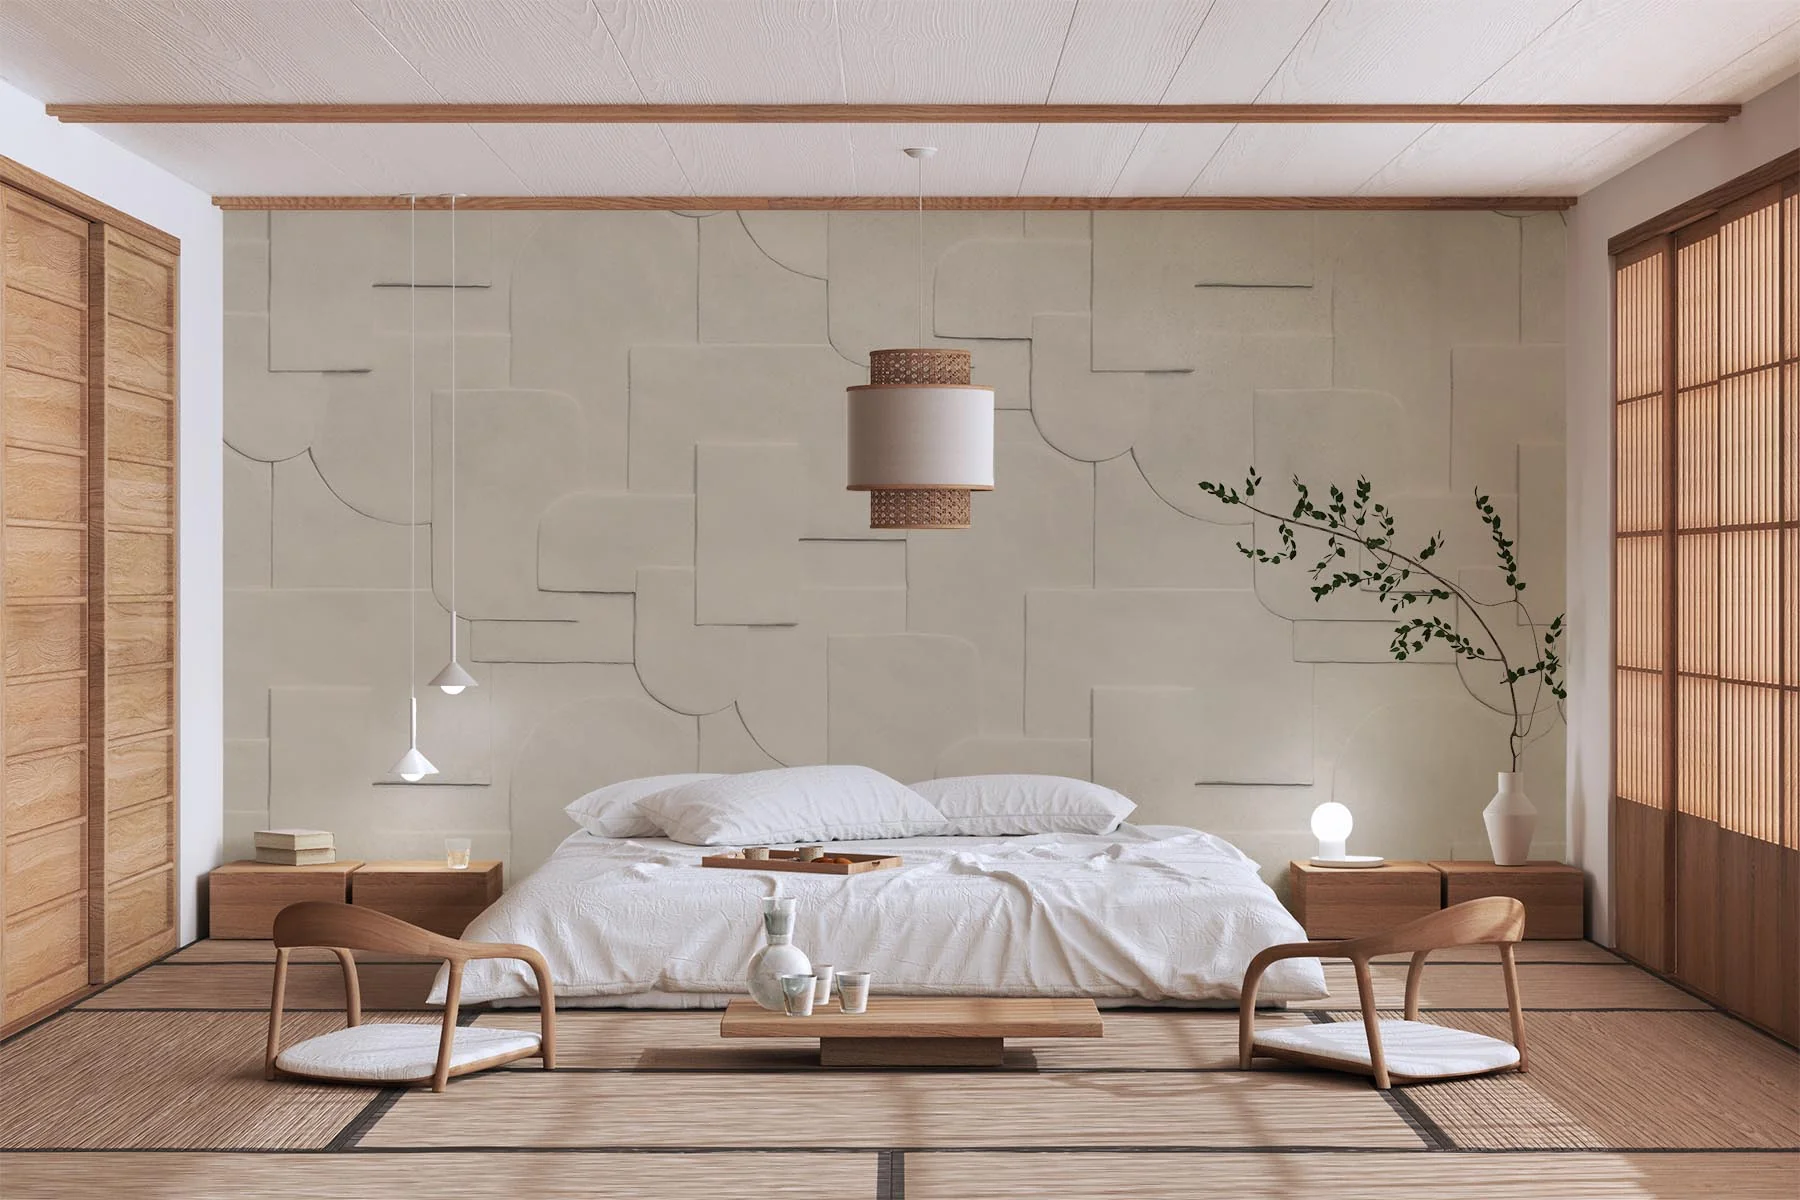 elements of japandi style bedroom